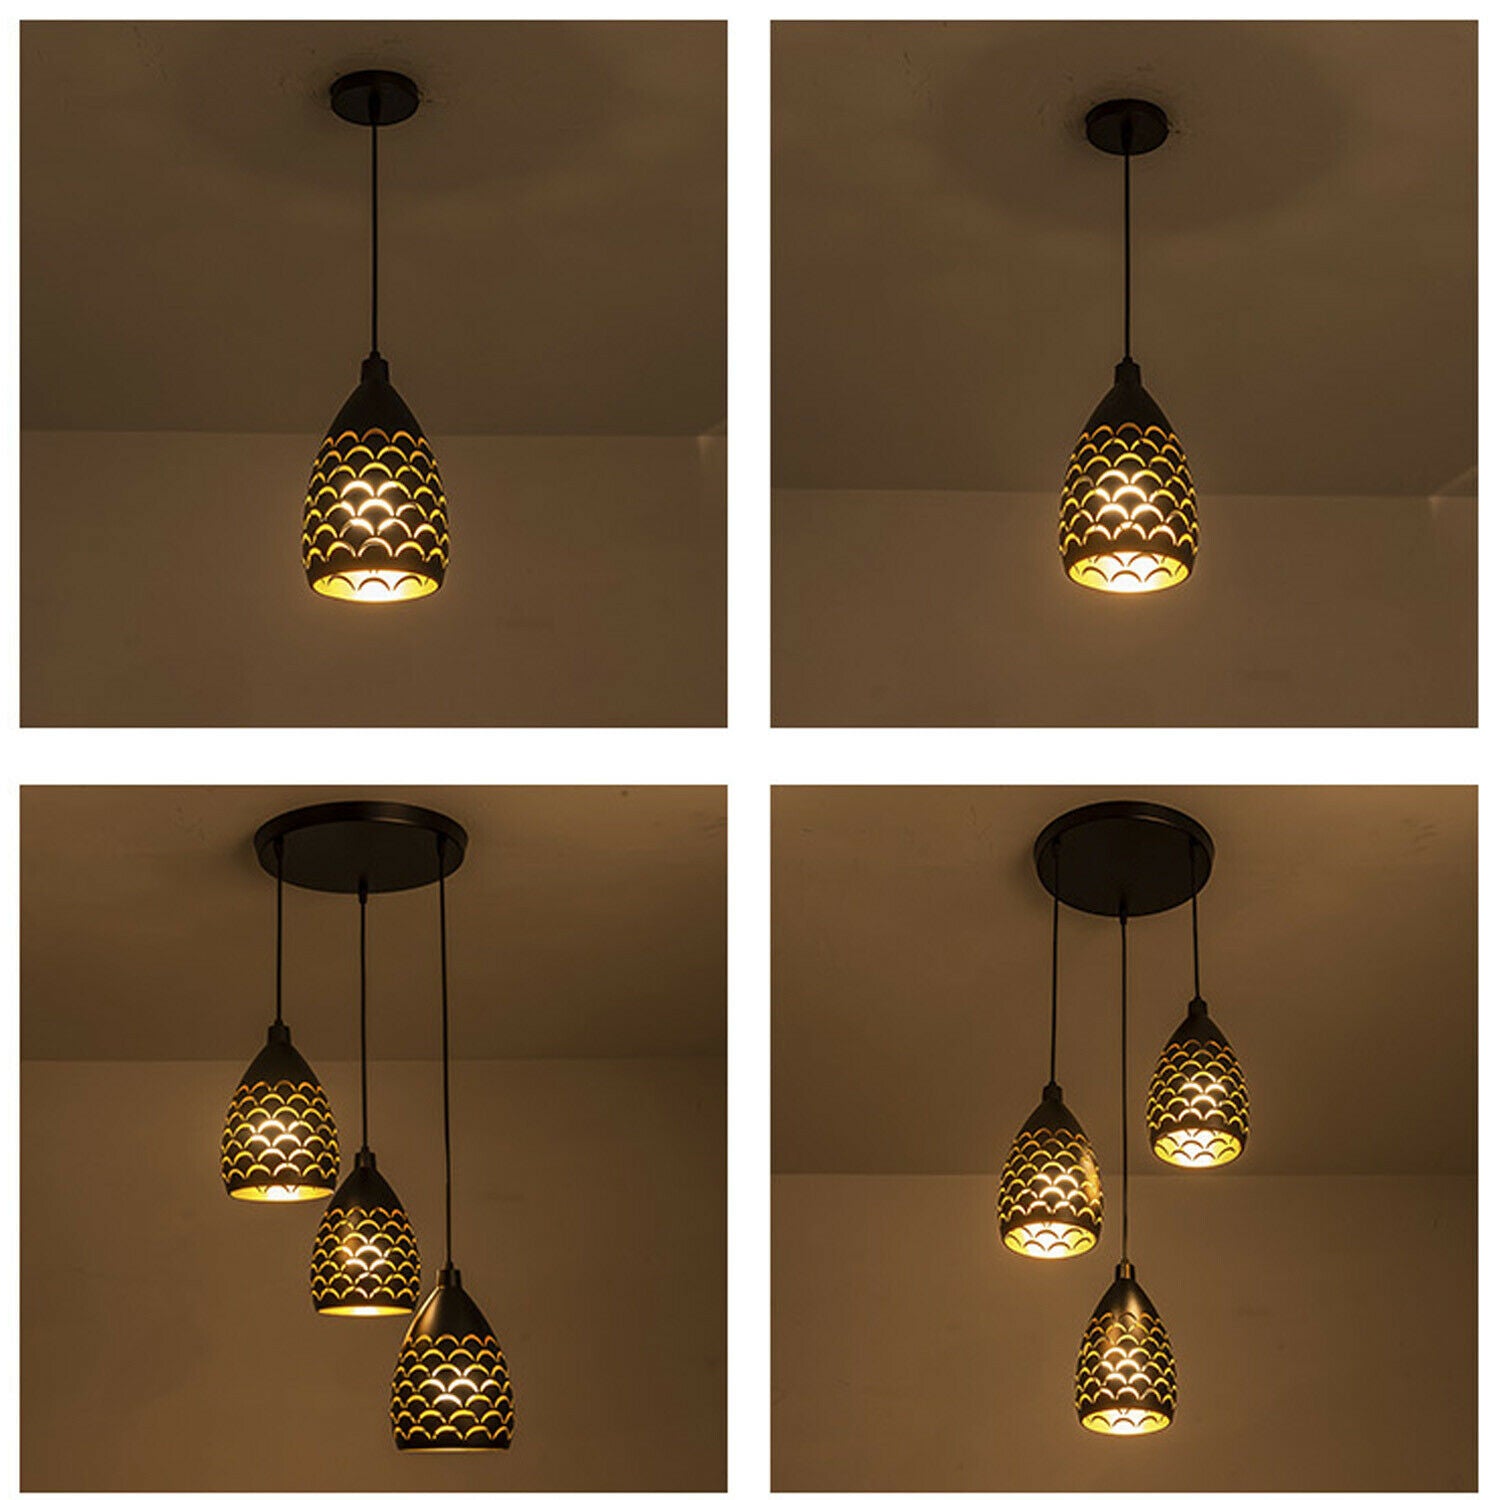 Pendant Cluster Light Fitting Lights Black Cage Style New~2551 - LEDSone UK Ltd